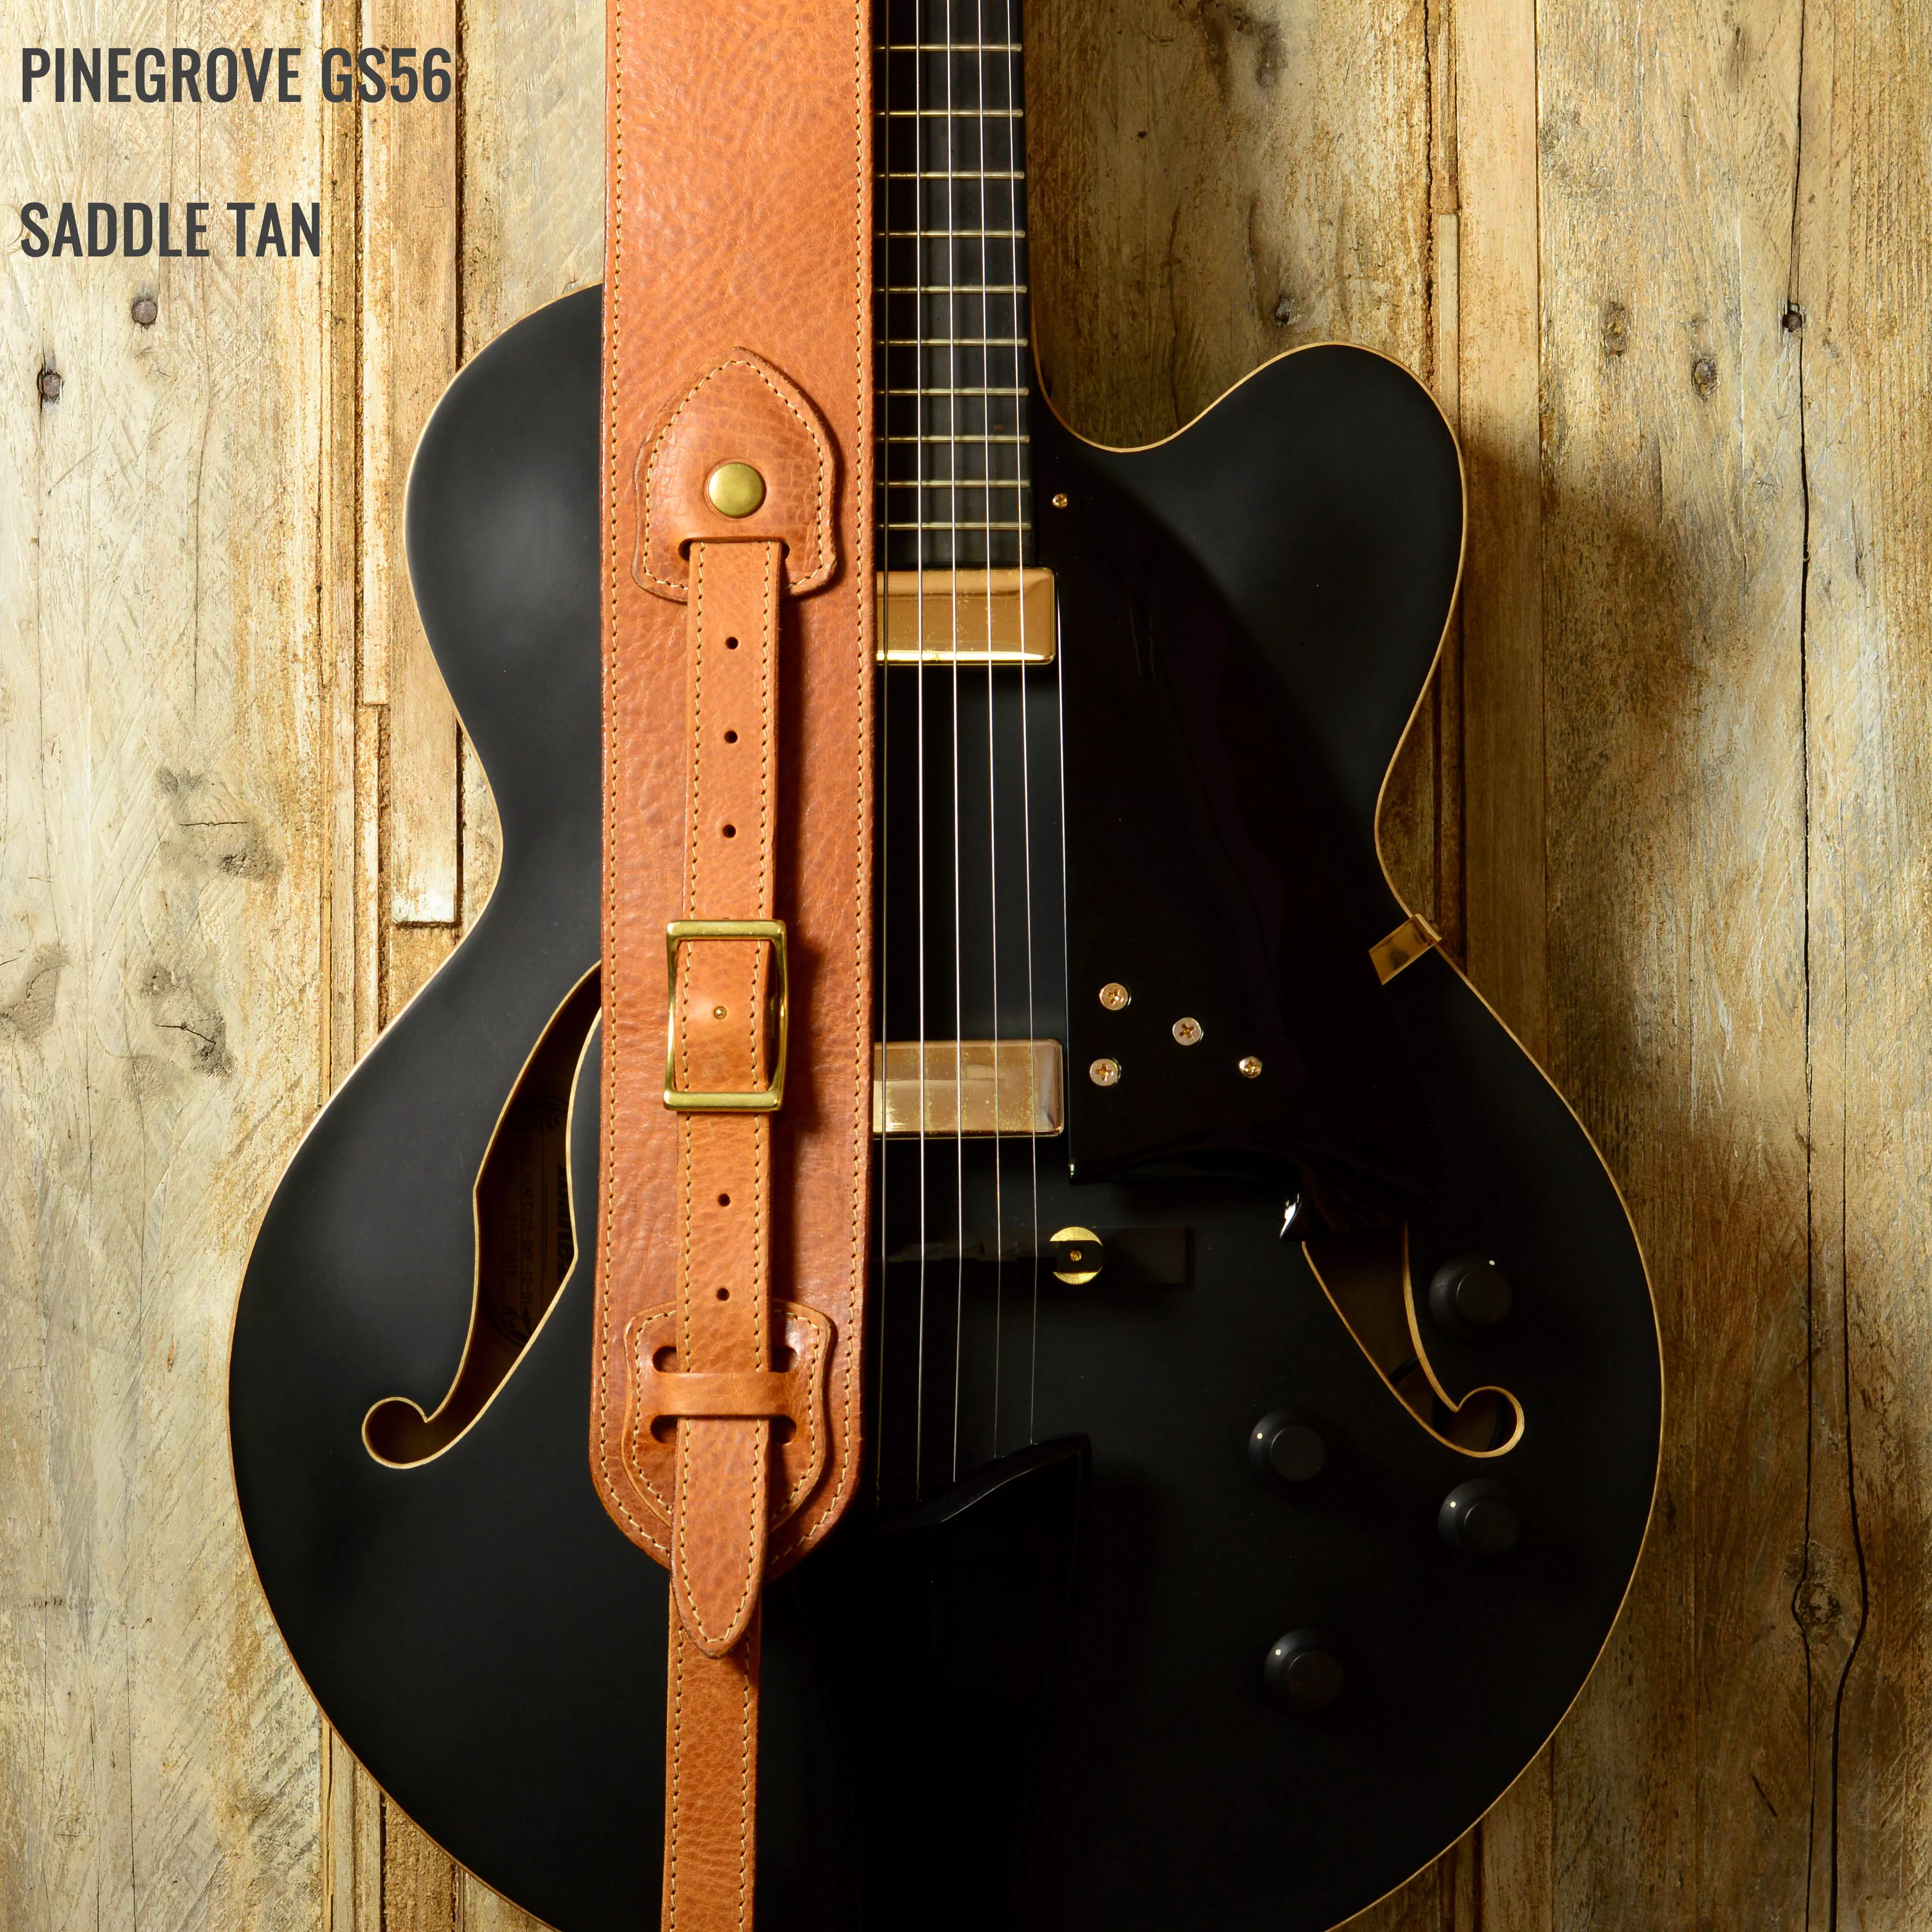 GS56 tan pinegrove leather guitar strap DSC_0669 less orange anno.jpg